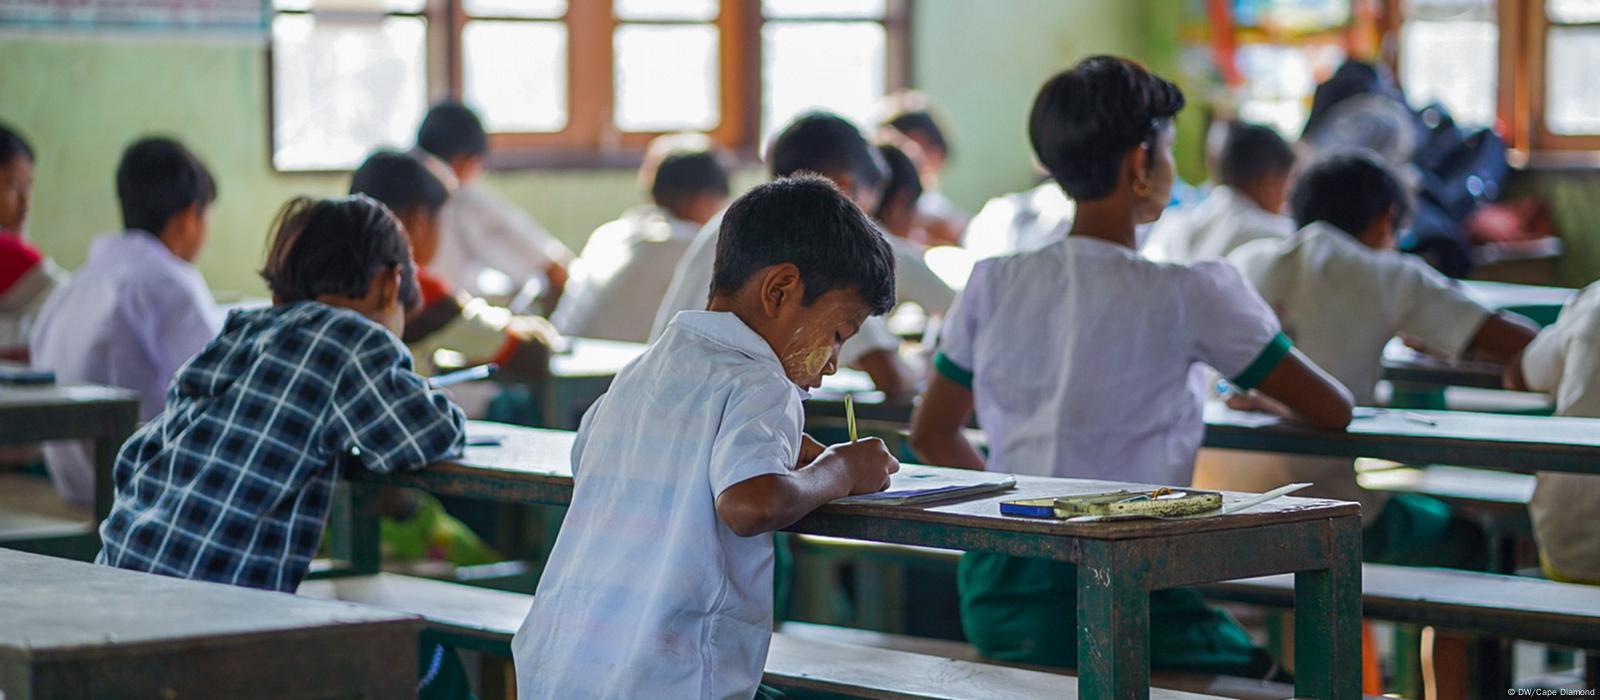 Asian Schoolgirl Lesbian - Sex education in schools sparks debate over morality â€“ DW â€“ 07/27/2020